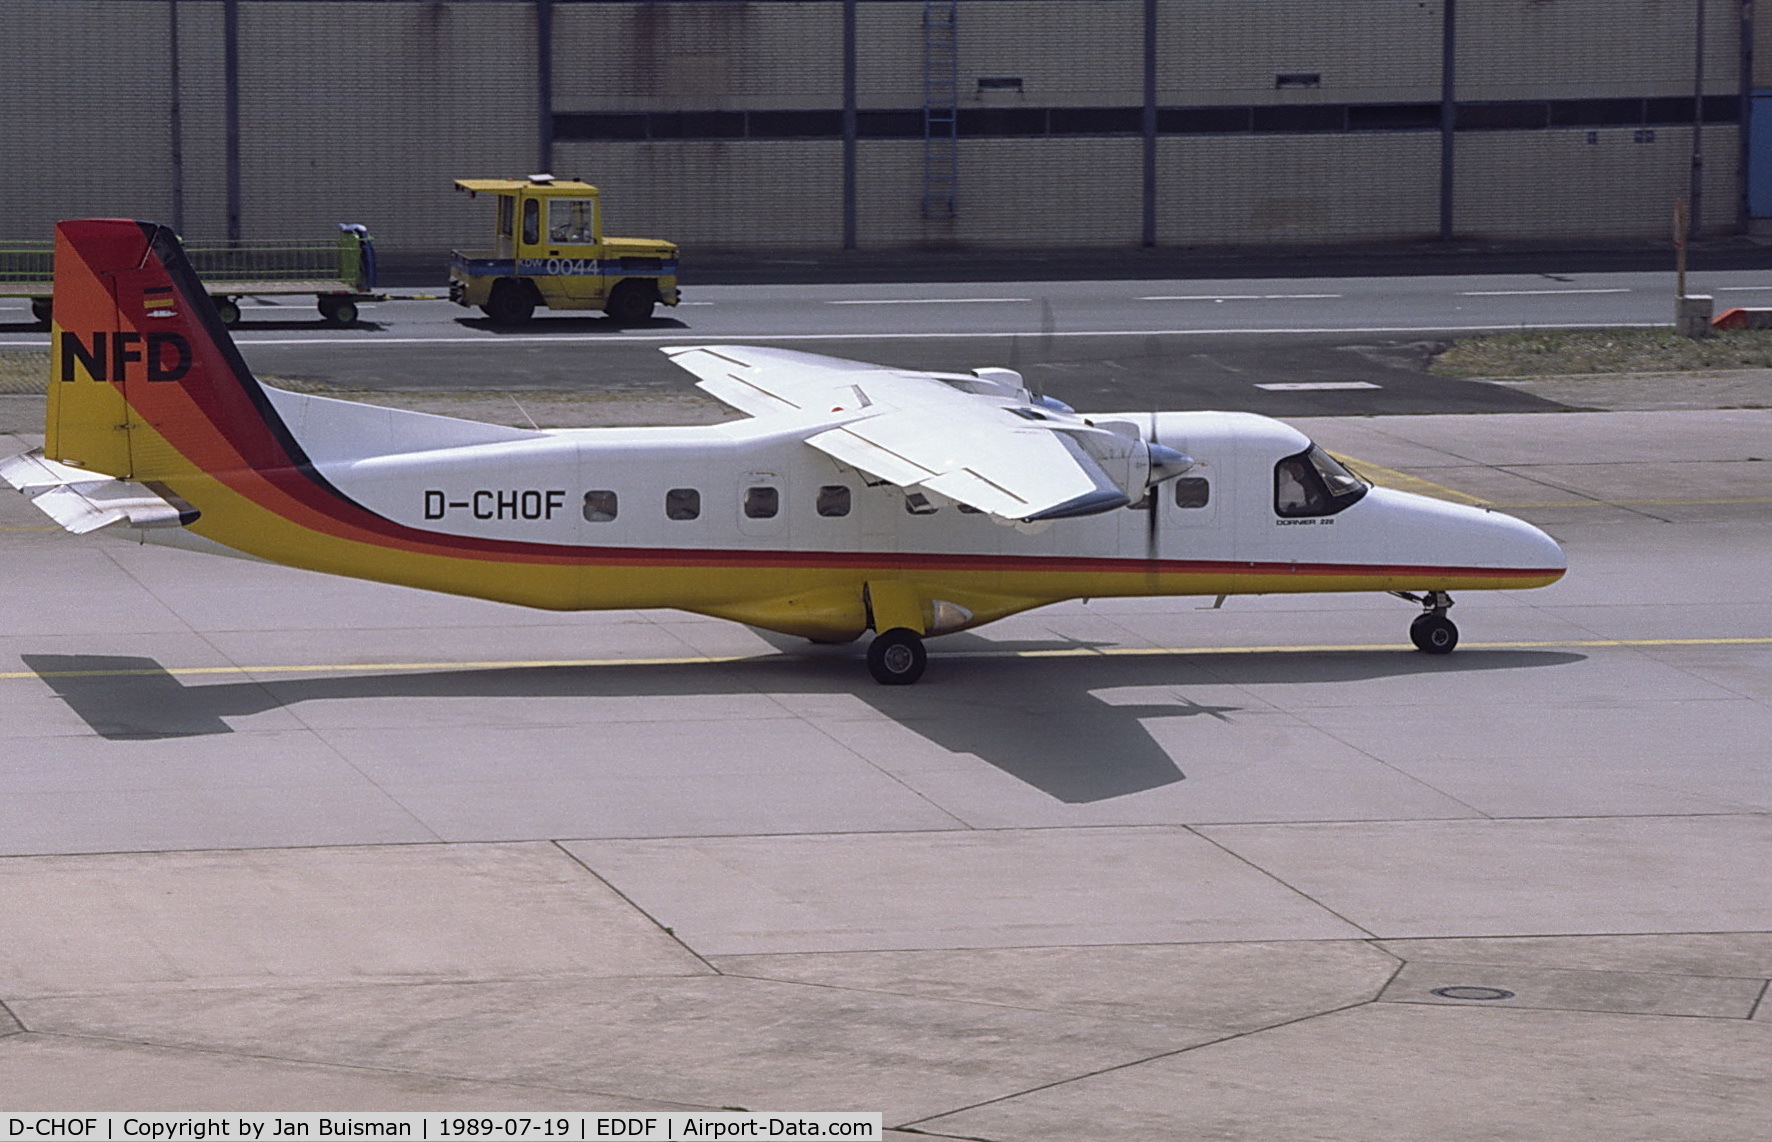 D-CHOF, 1985 Dornier 228-202 C/N 8069, NFD